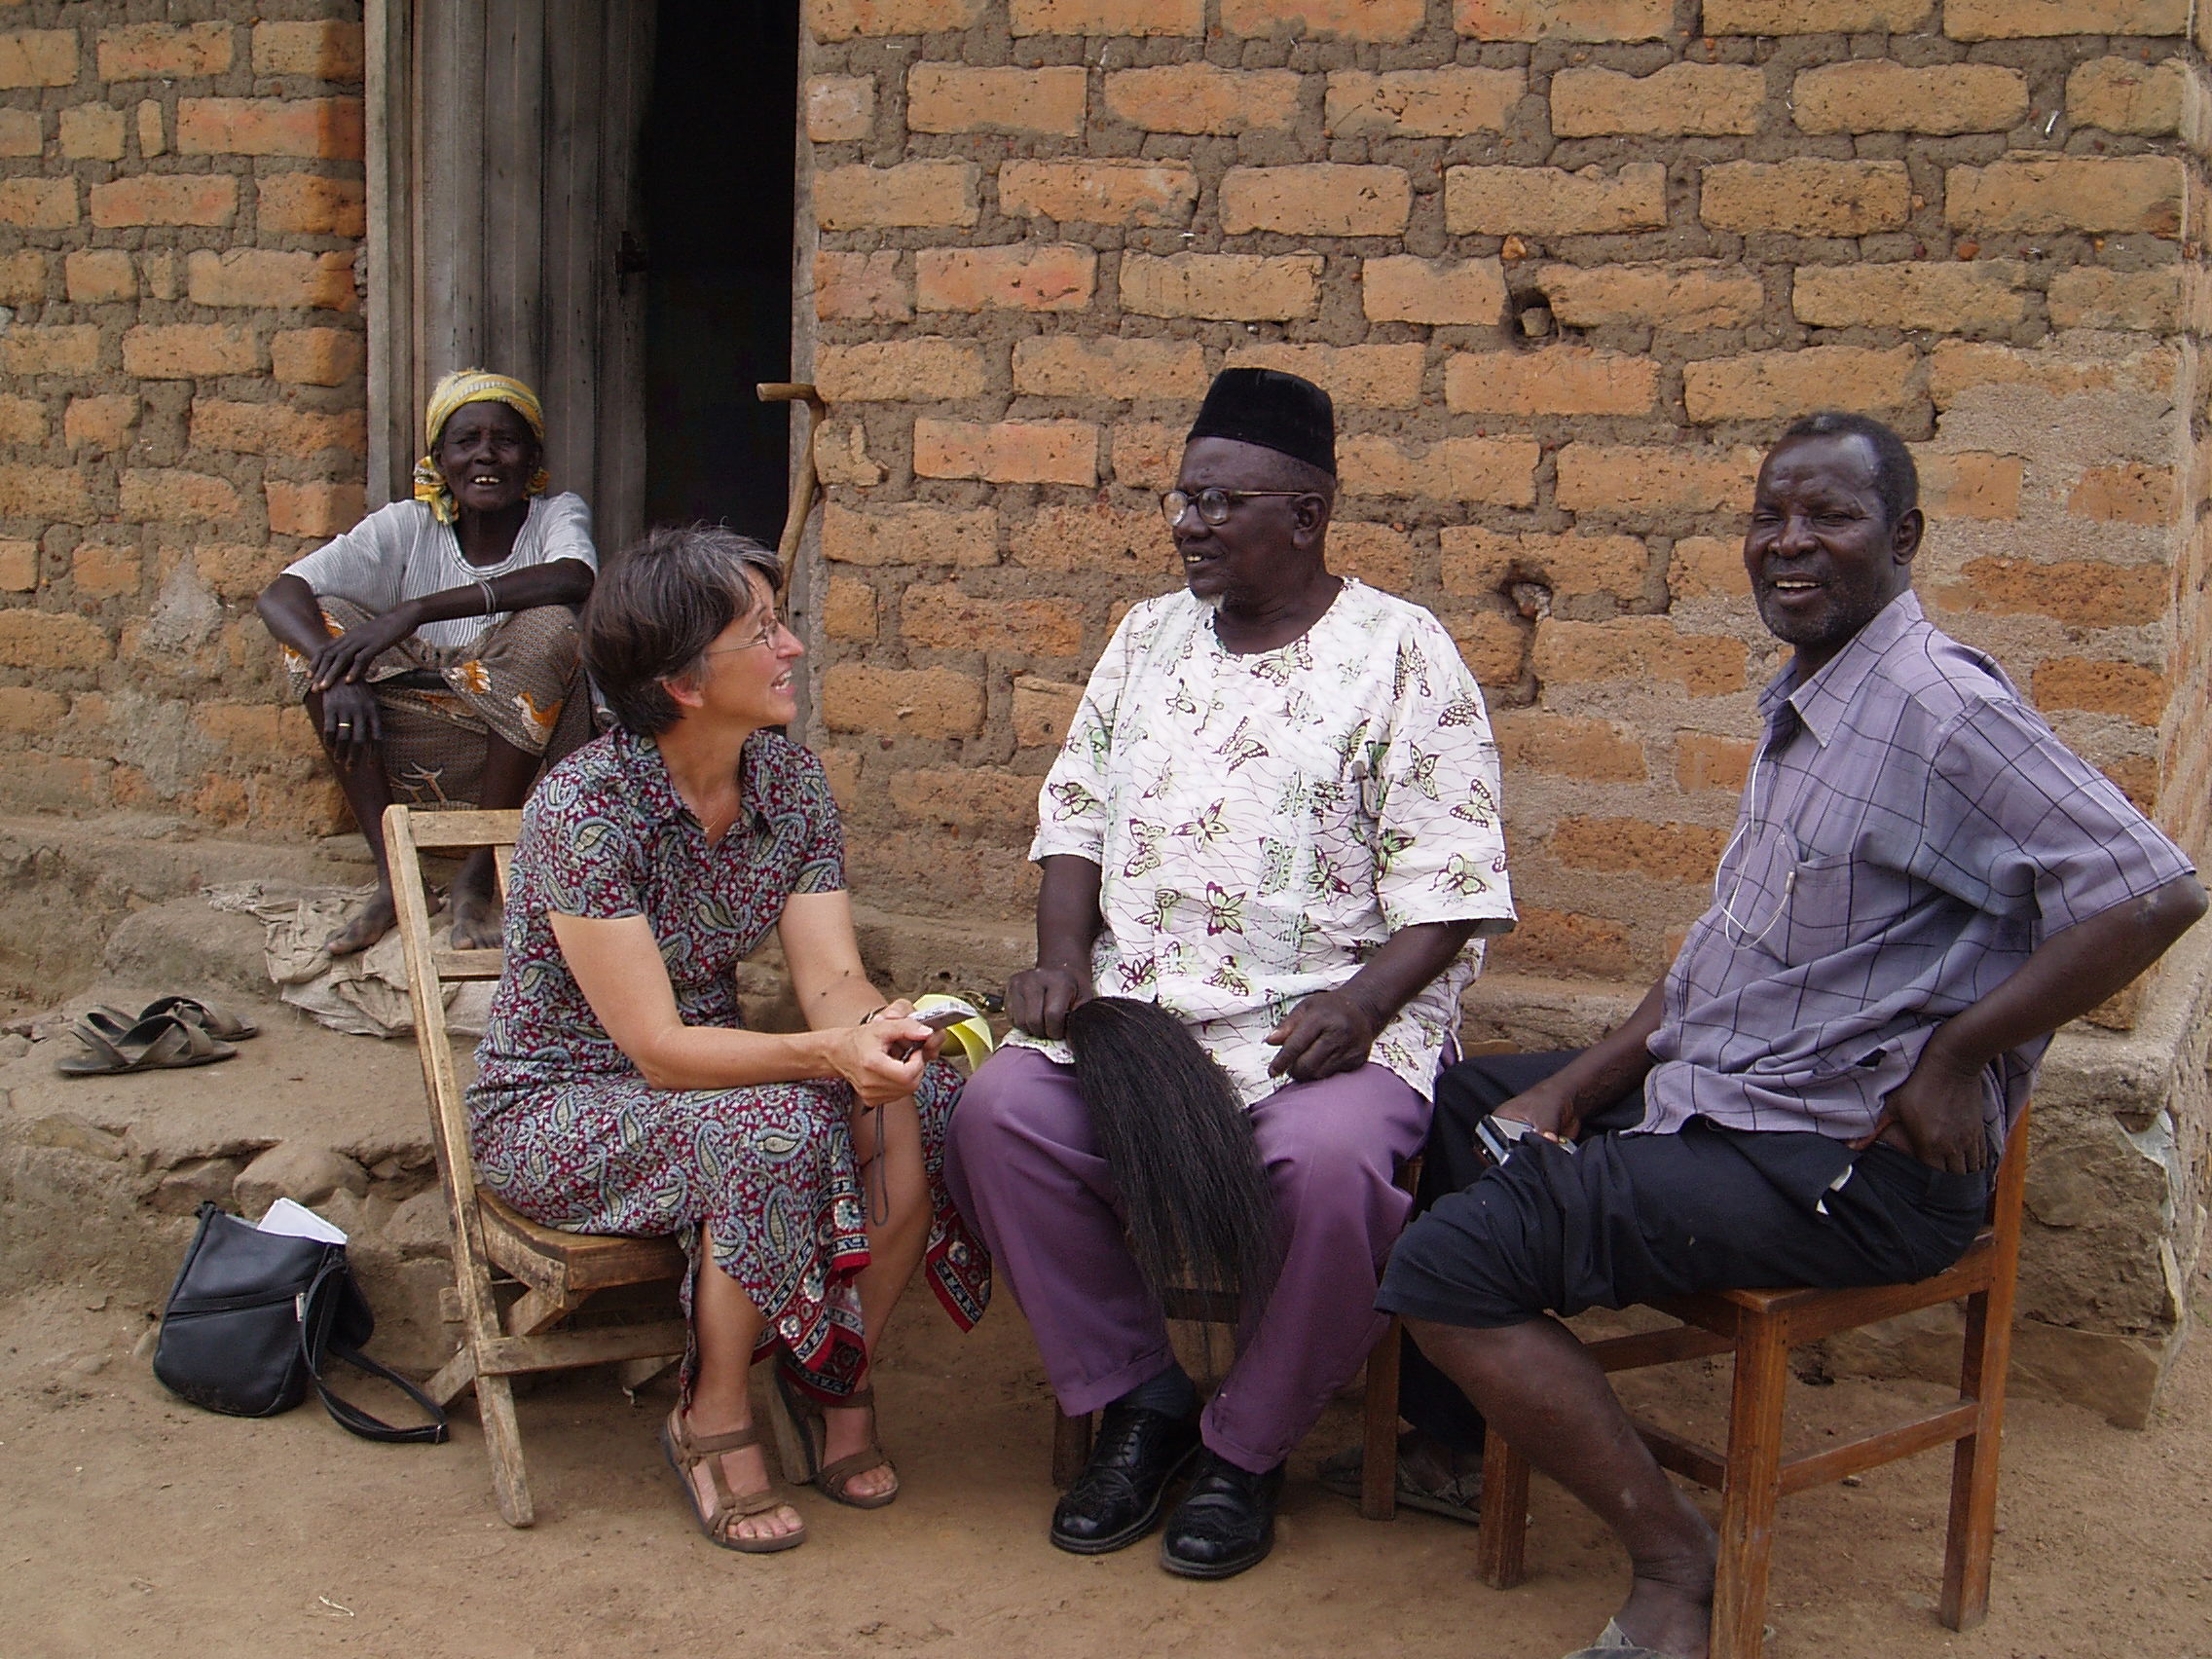 Photograph of Alexander Ogoche Ayo, Jan Bender Shetler, Zedekia Oloo Siso, and one other at interview